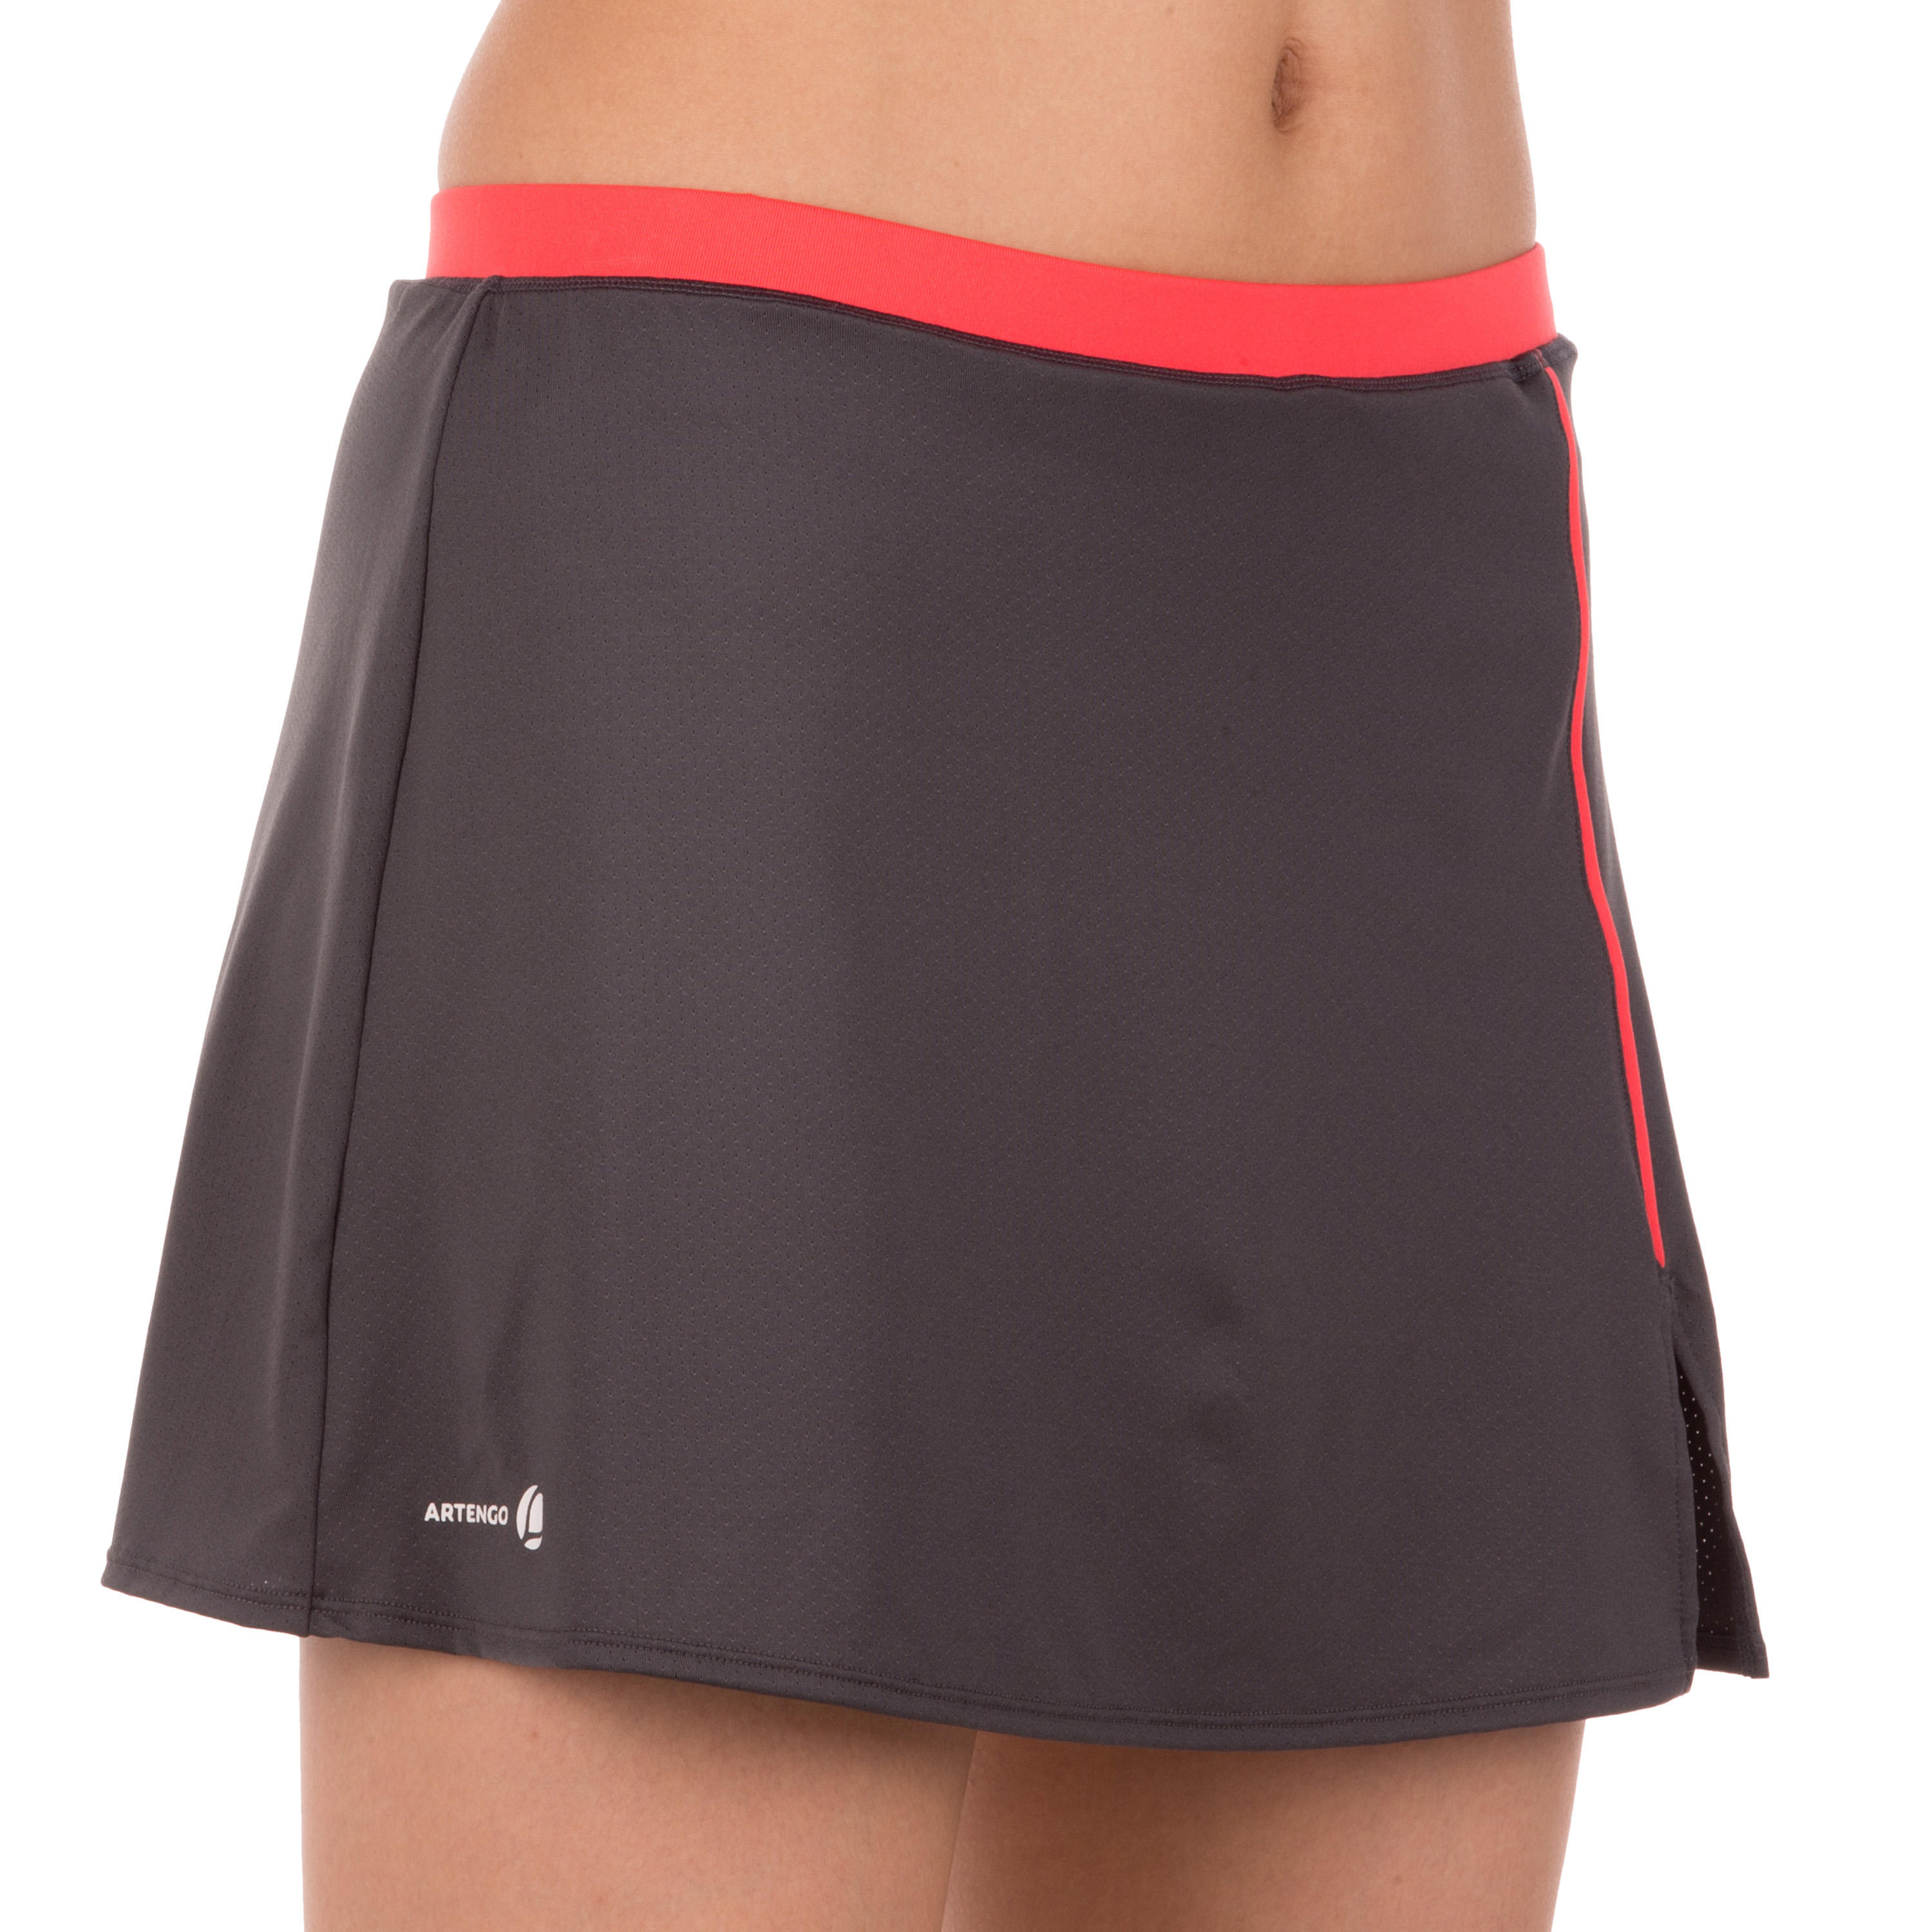 ARTENGO Soft Women's Tennis Badminton Table Tennis Squash Padel Skirt - Grey/Pink